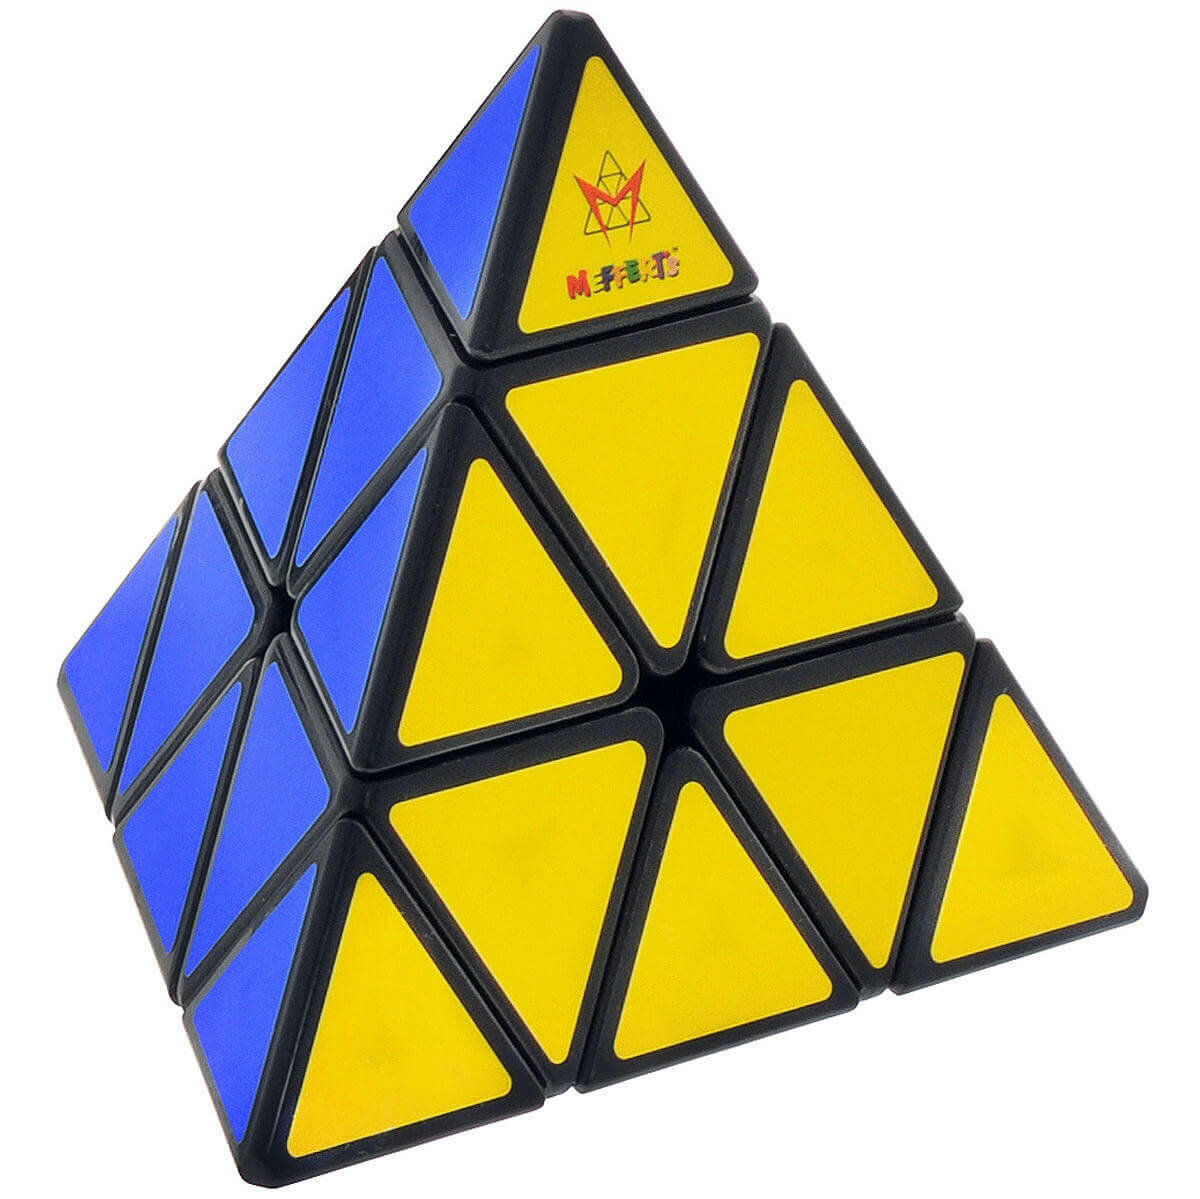 Mefferts Головоломка Пирамидка (Meffert's Pyraminx)